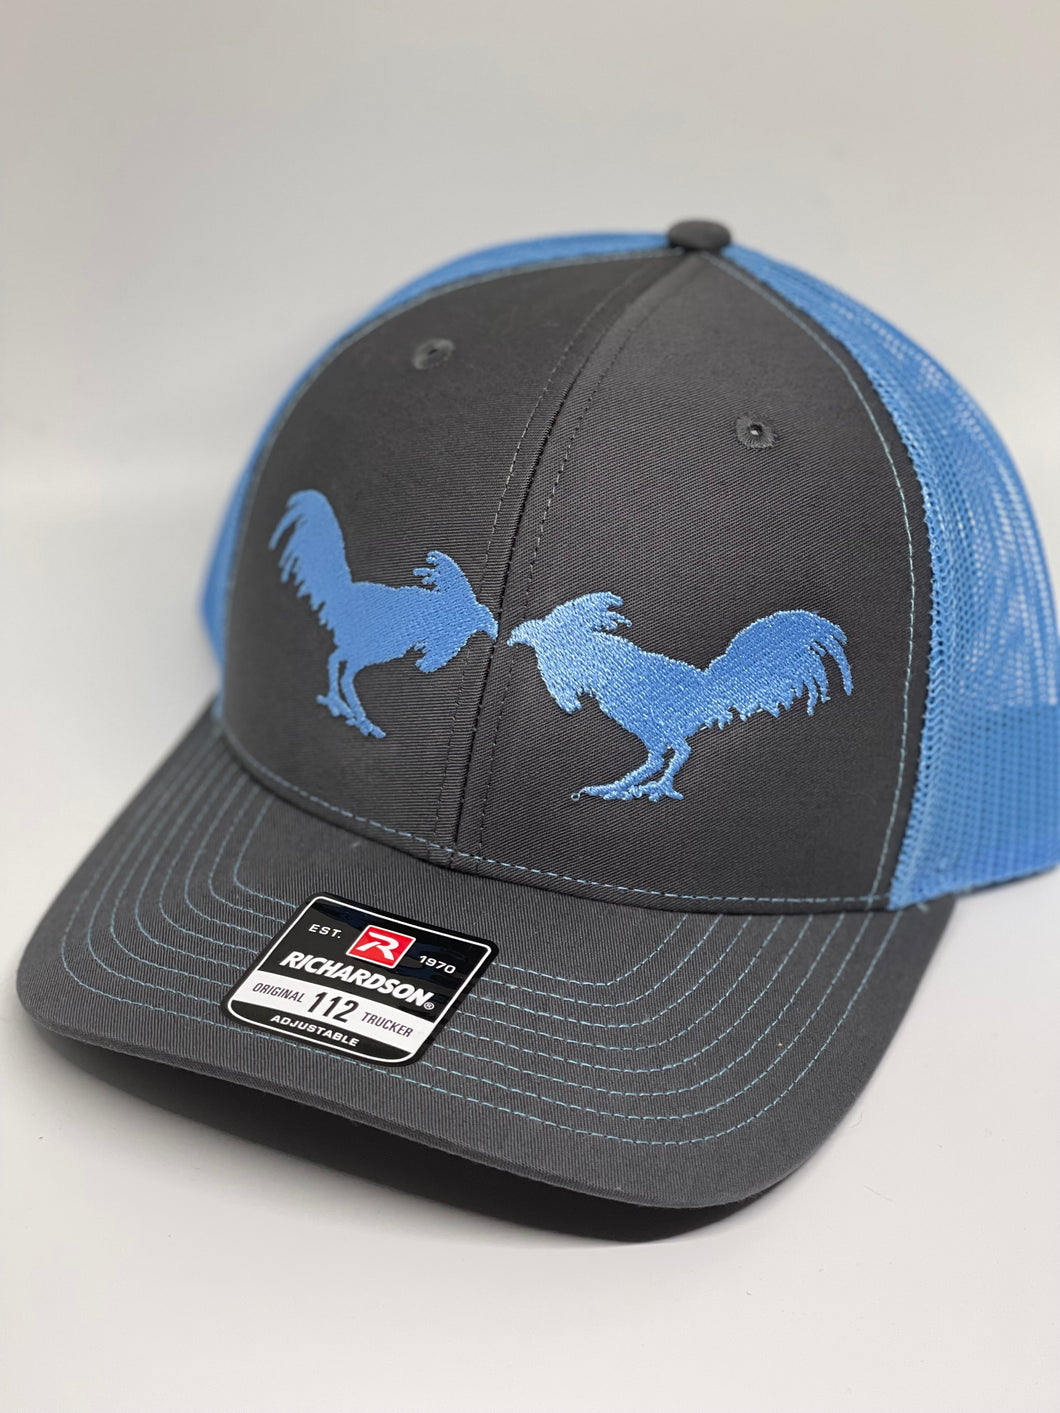 Rooster Swamp Cracker Flex Fit Hat – Swamp Cracker Outdoor Apparel